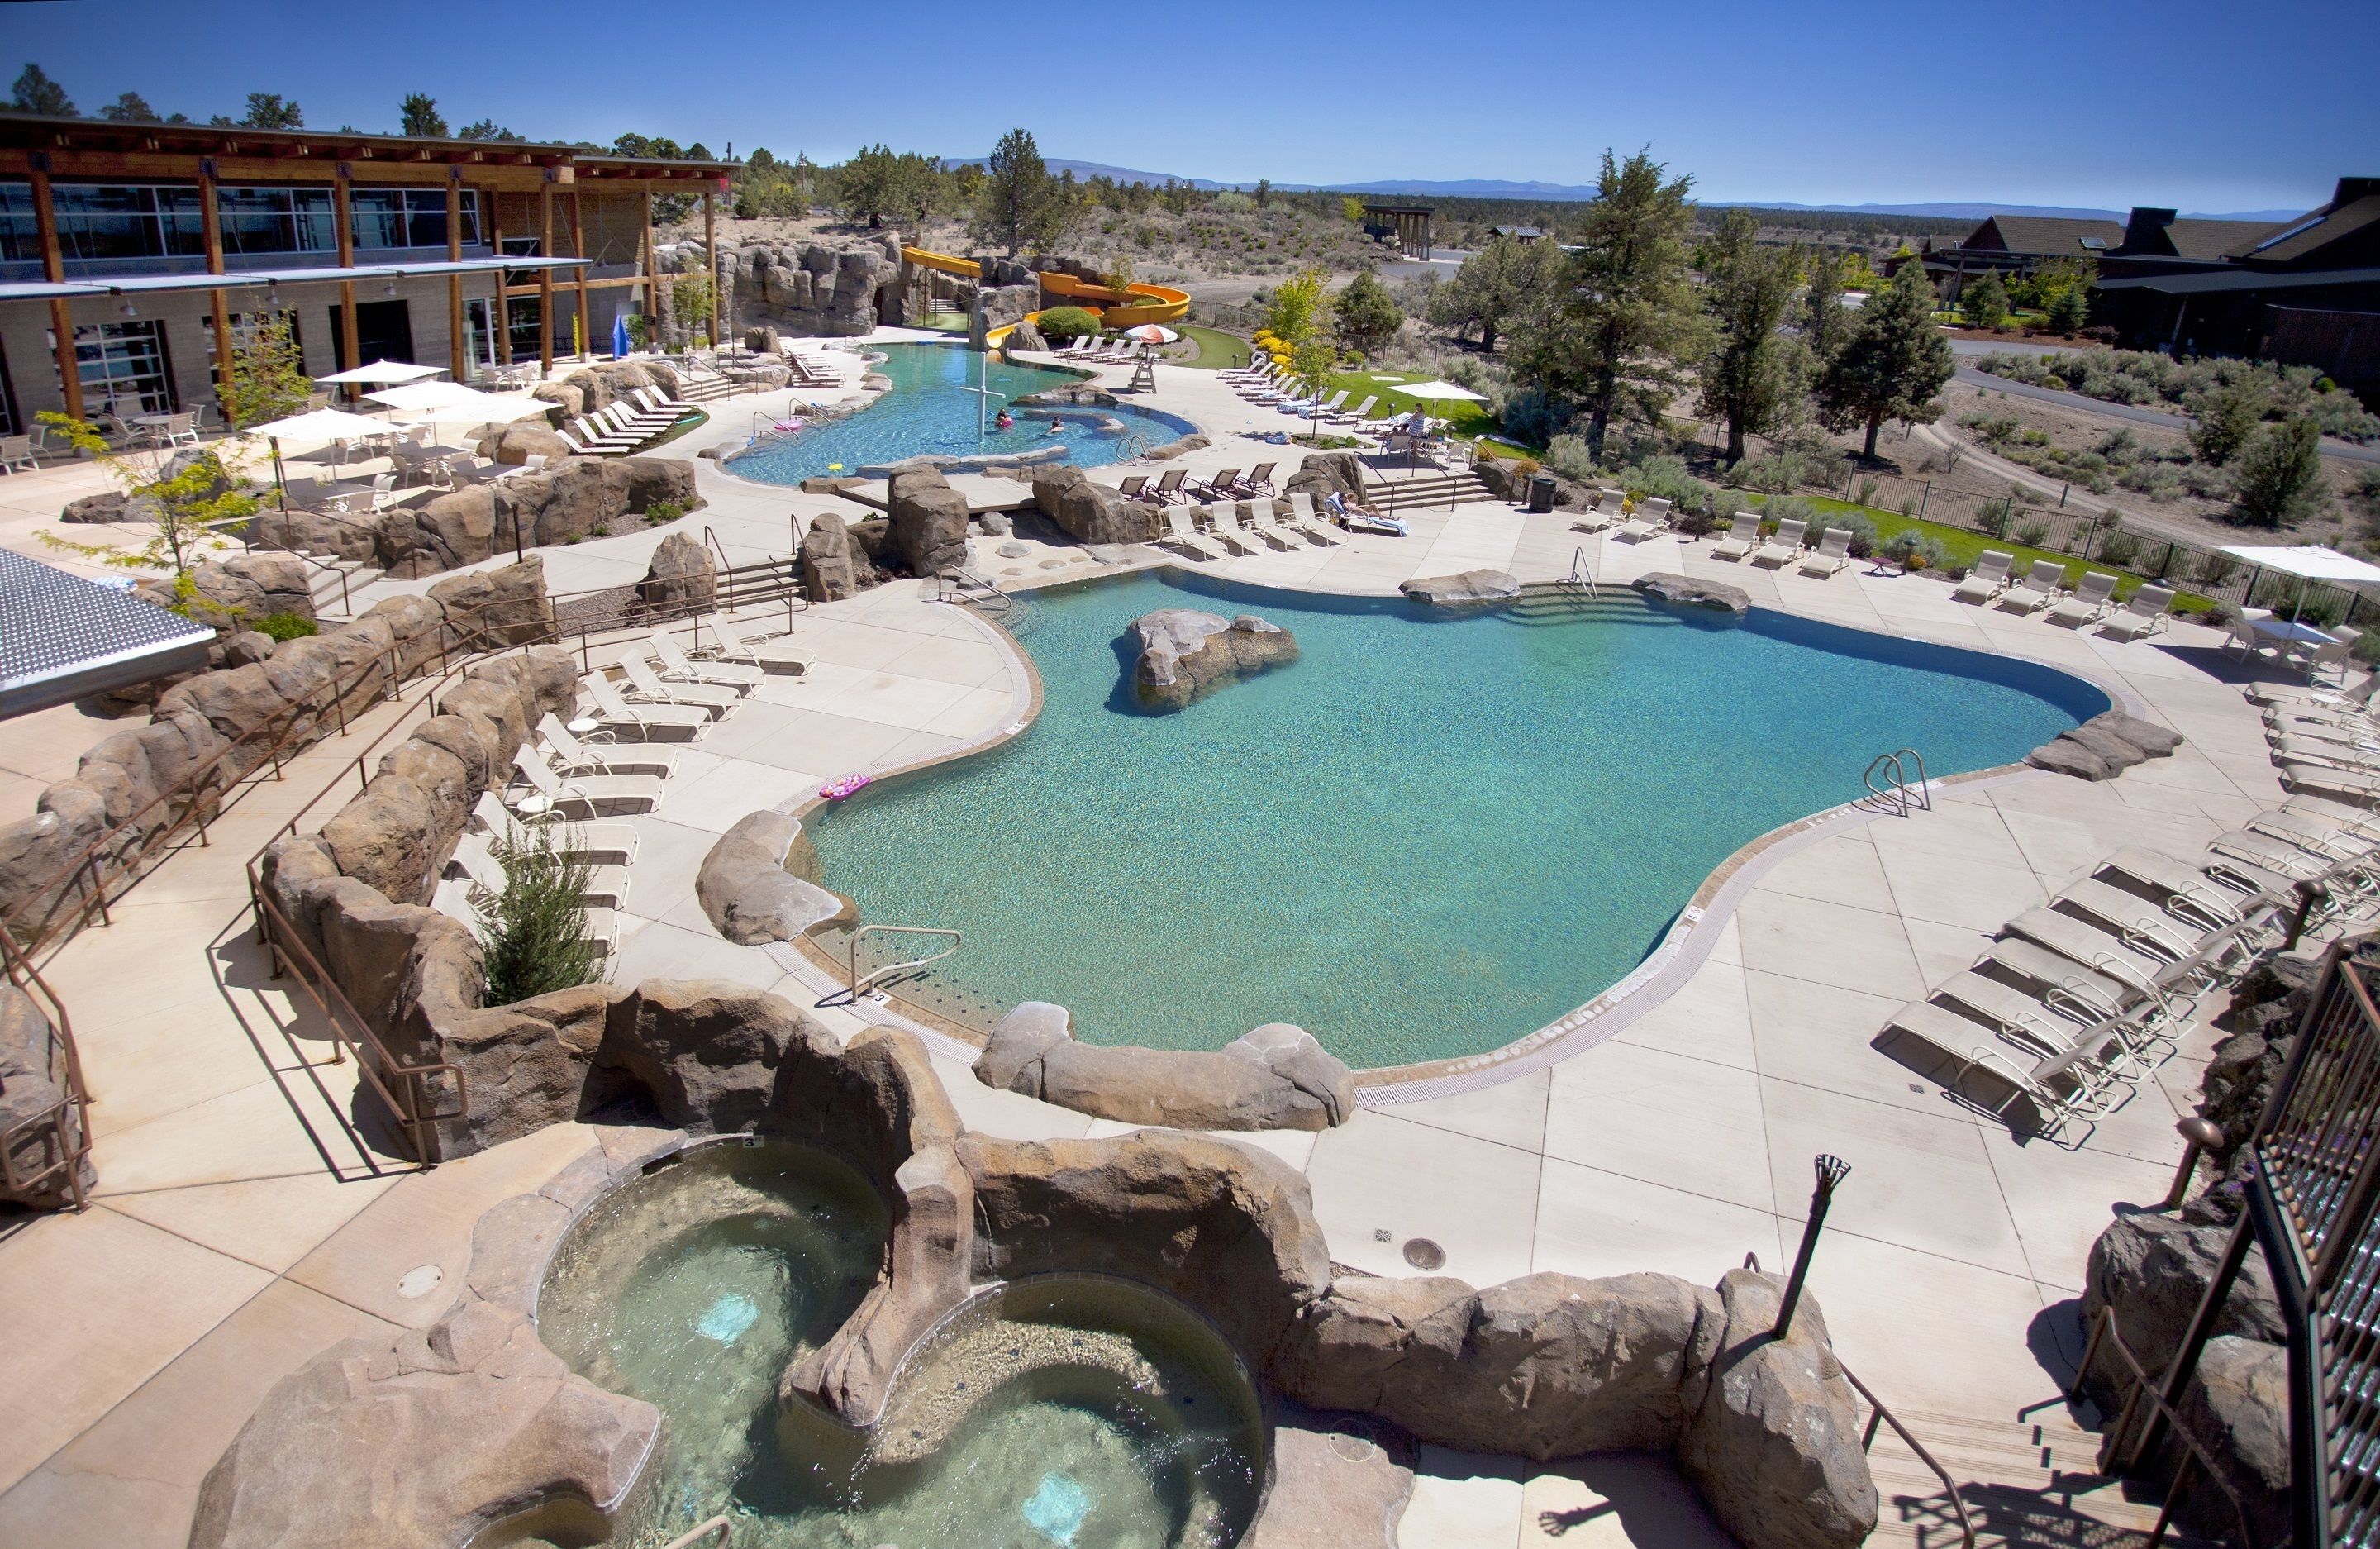 Pool view of Brasada Ranch